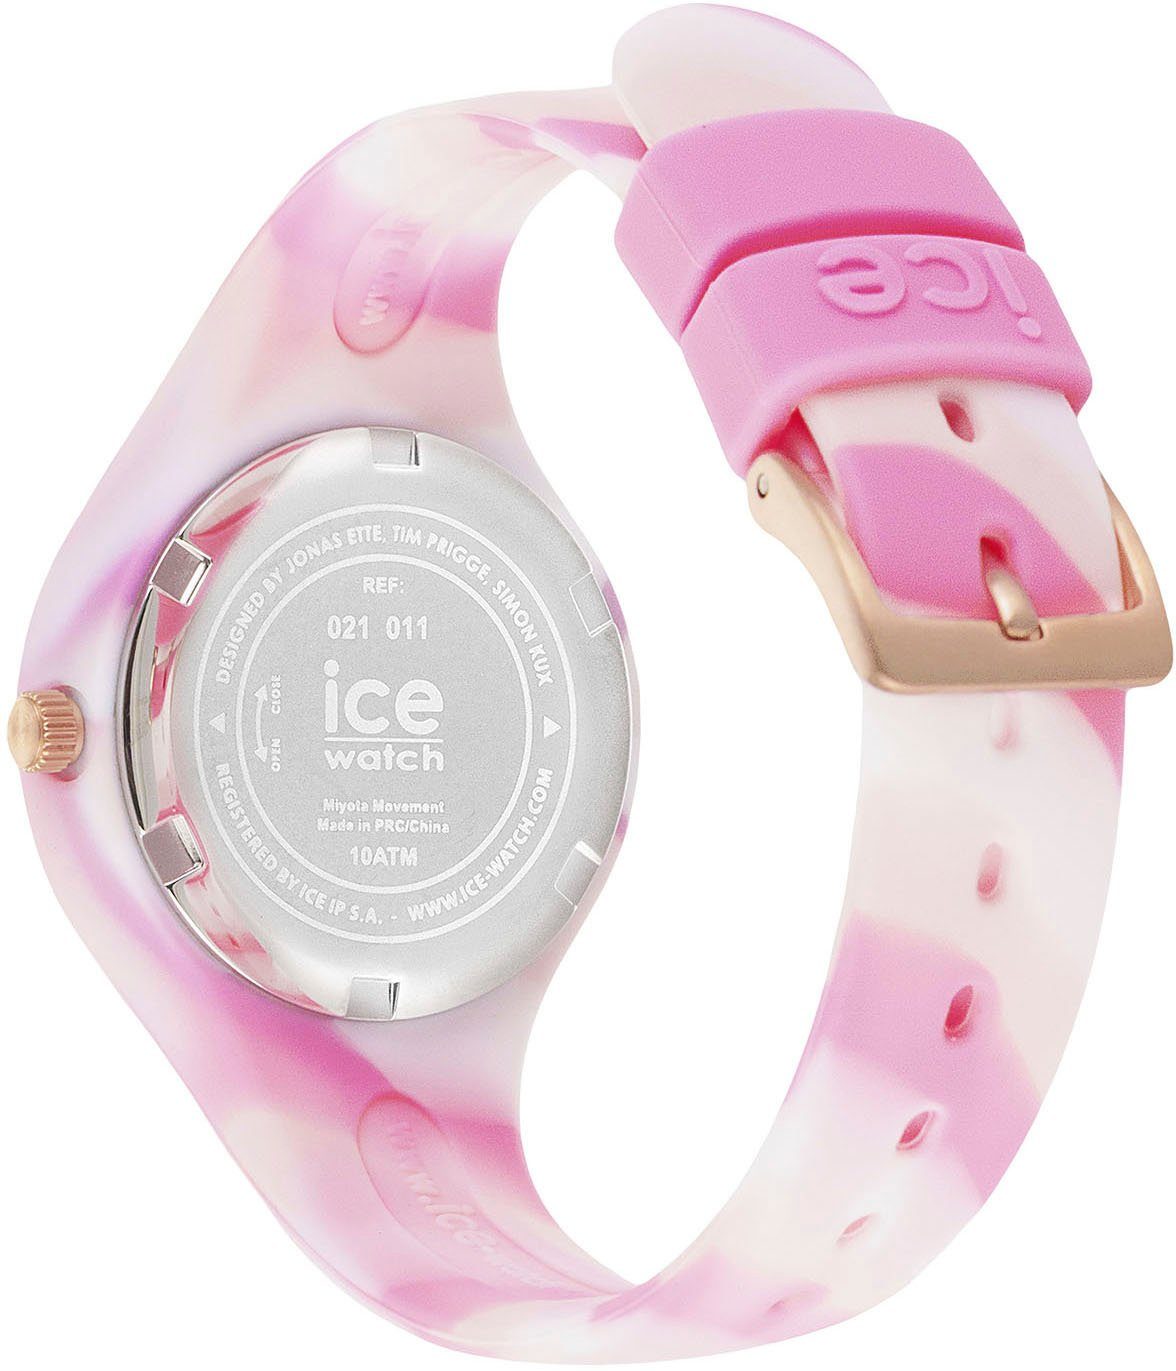 ice-watch Quarzuhr shades als - 021011, ICE ideal Extra-Small tie dye Pink 3H, auch and - - Geschenk